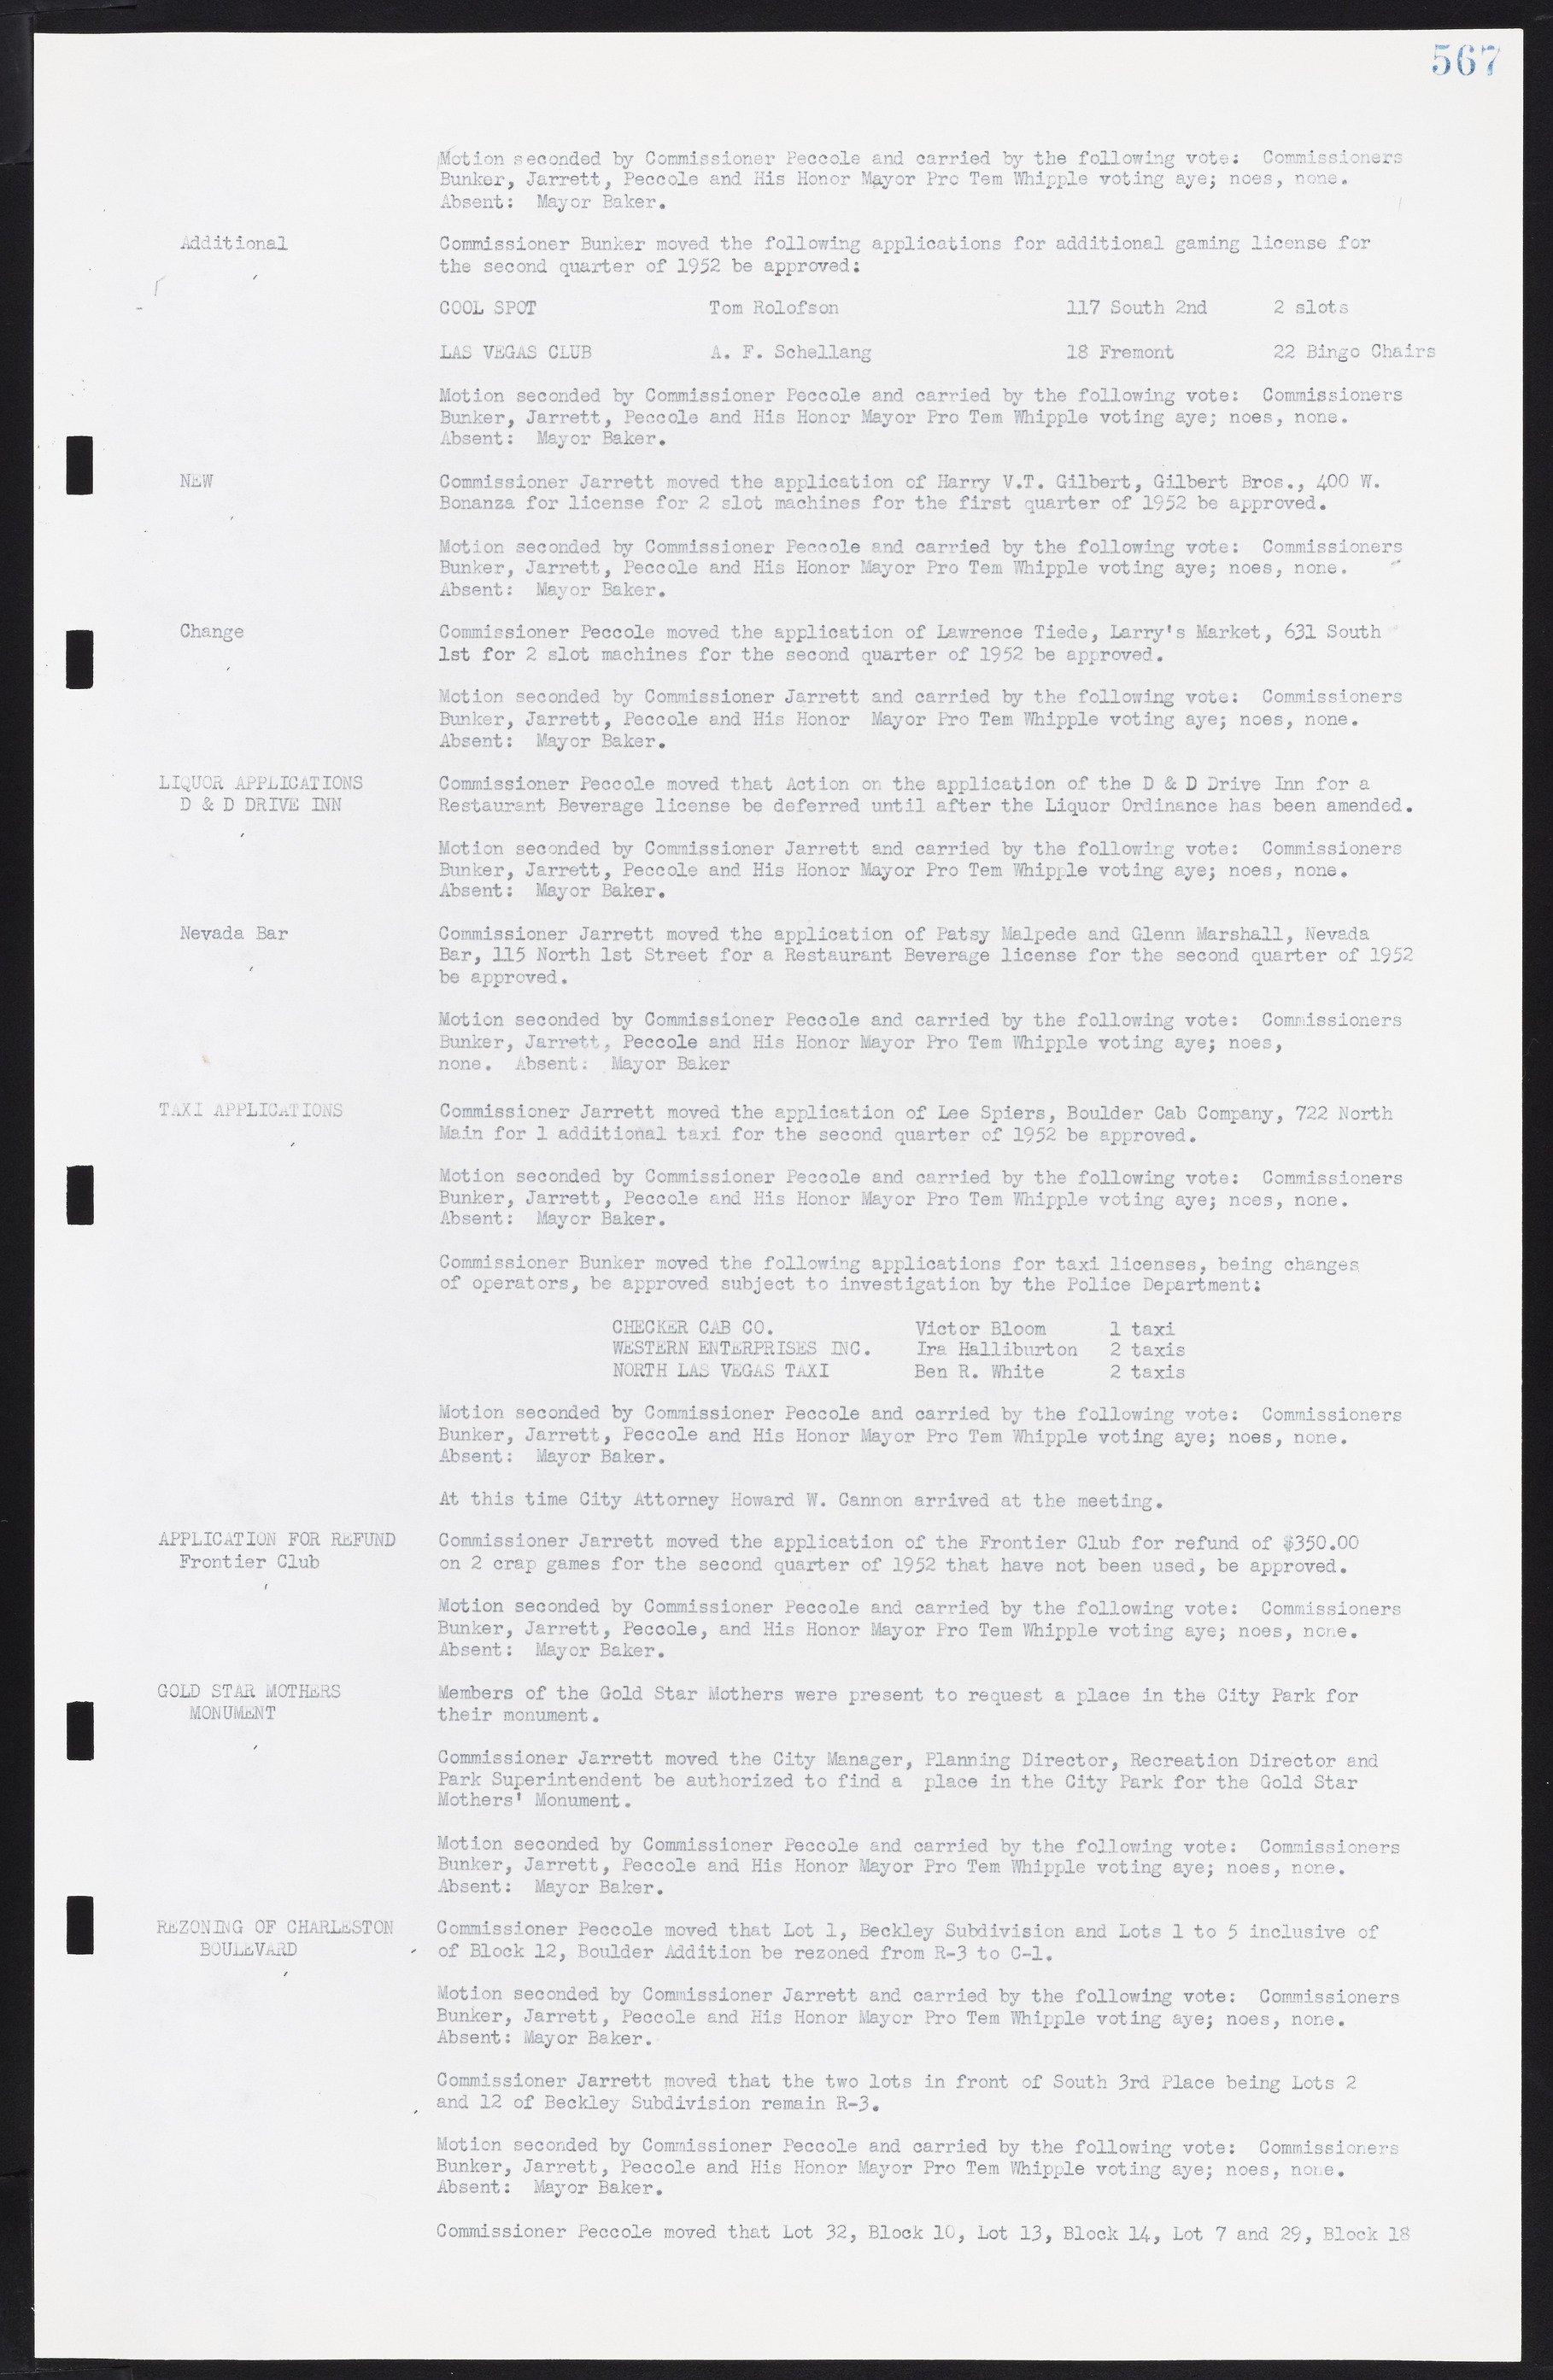 Las Vegas City Commission Minutes, November 7, 1949 to May 21, 1952, lvc000007-585